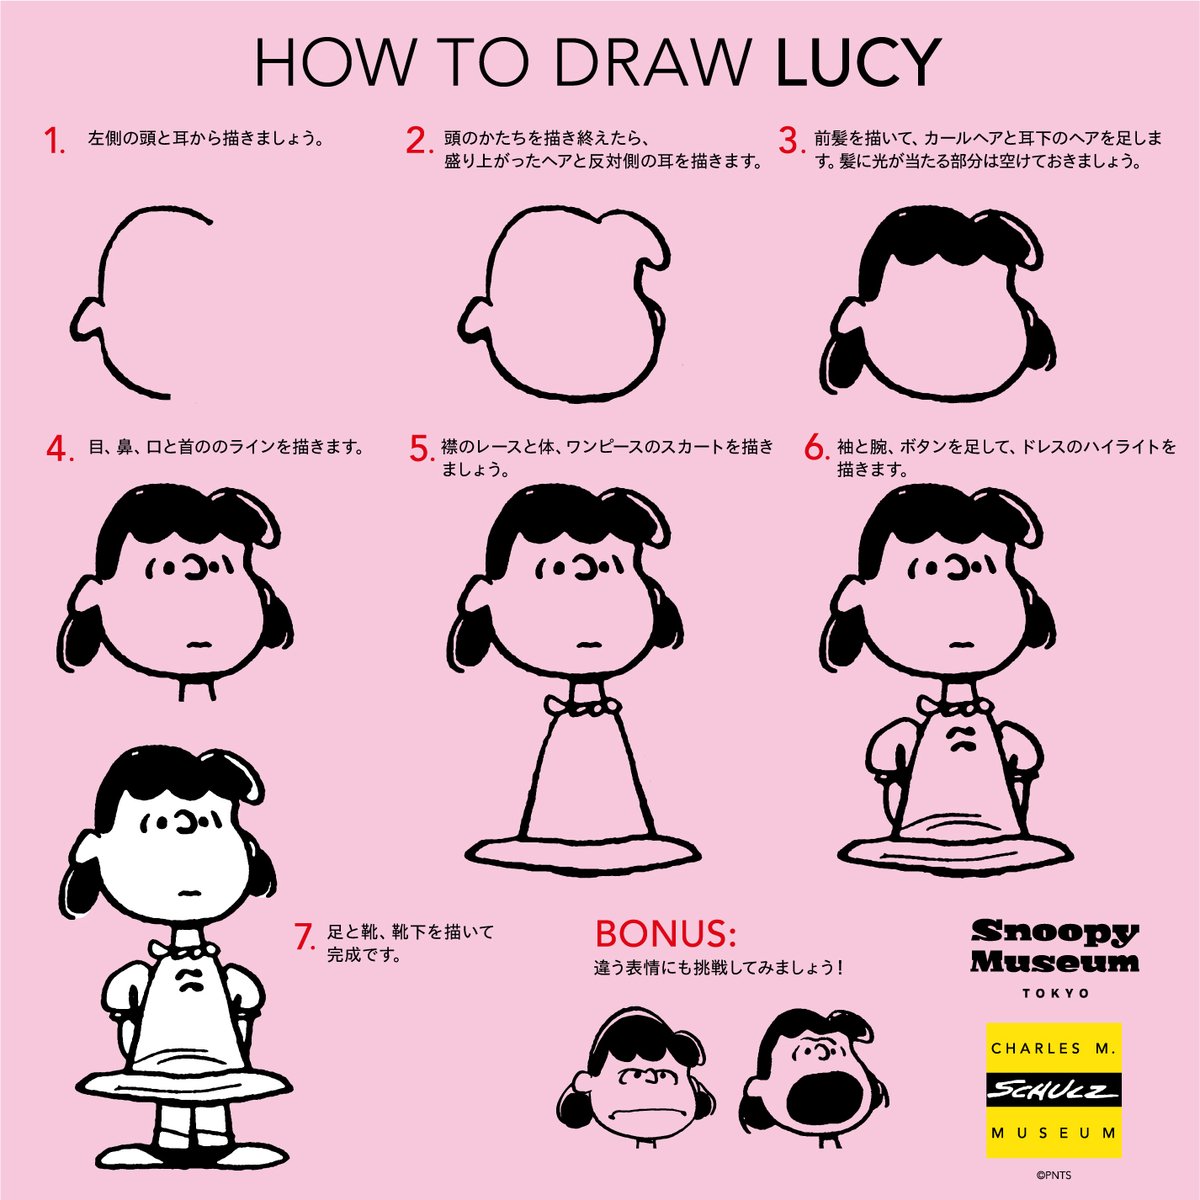 Snoopy Museum Tokyo ピーナッツ ギャングを描こう ガミガミ屋さんの女の子 ルーシーの描き方をご紹介します あなたが描いた絵に ピーナッツギャングを描こう をつけてシェアしてくださいね Schulzmuseum Drawlucy Snoopymuseumtokyo